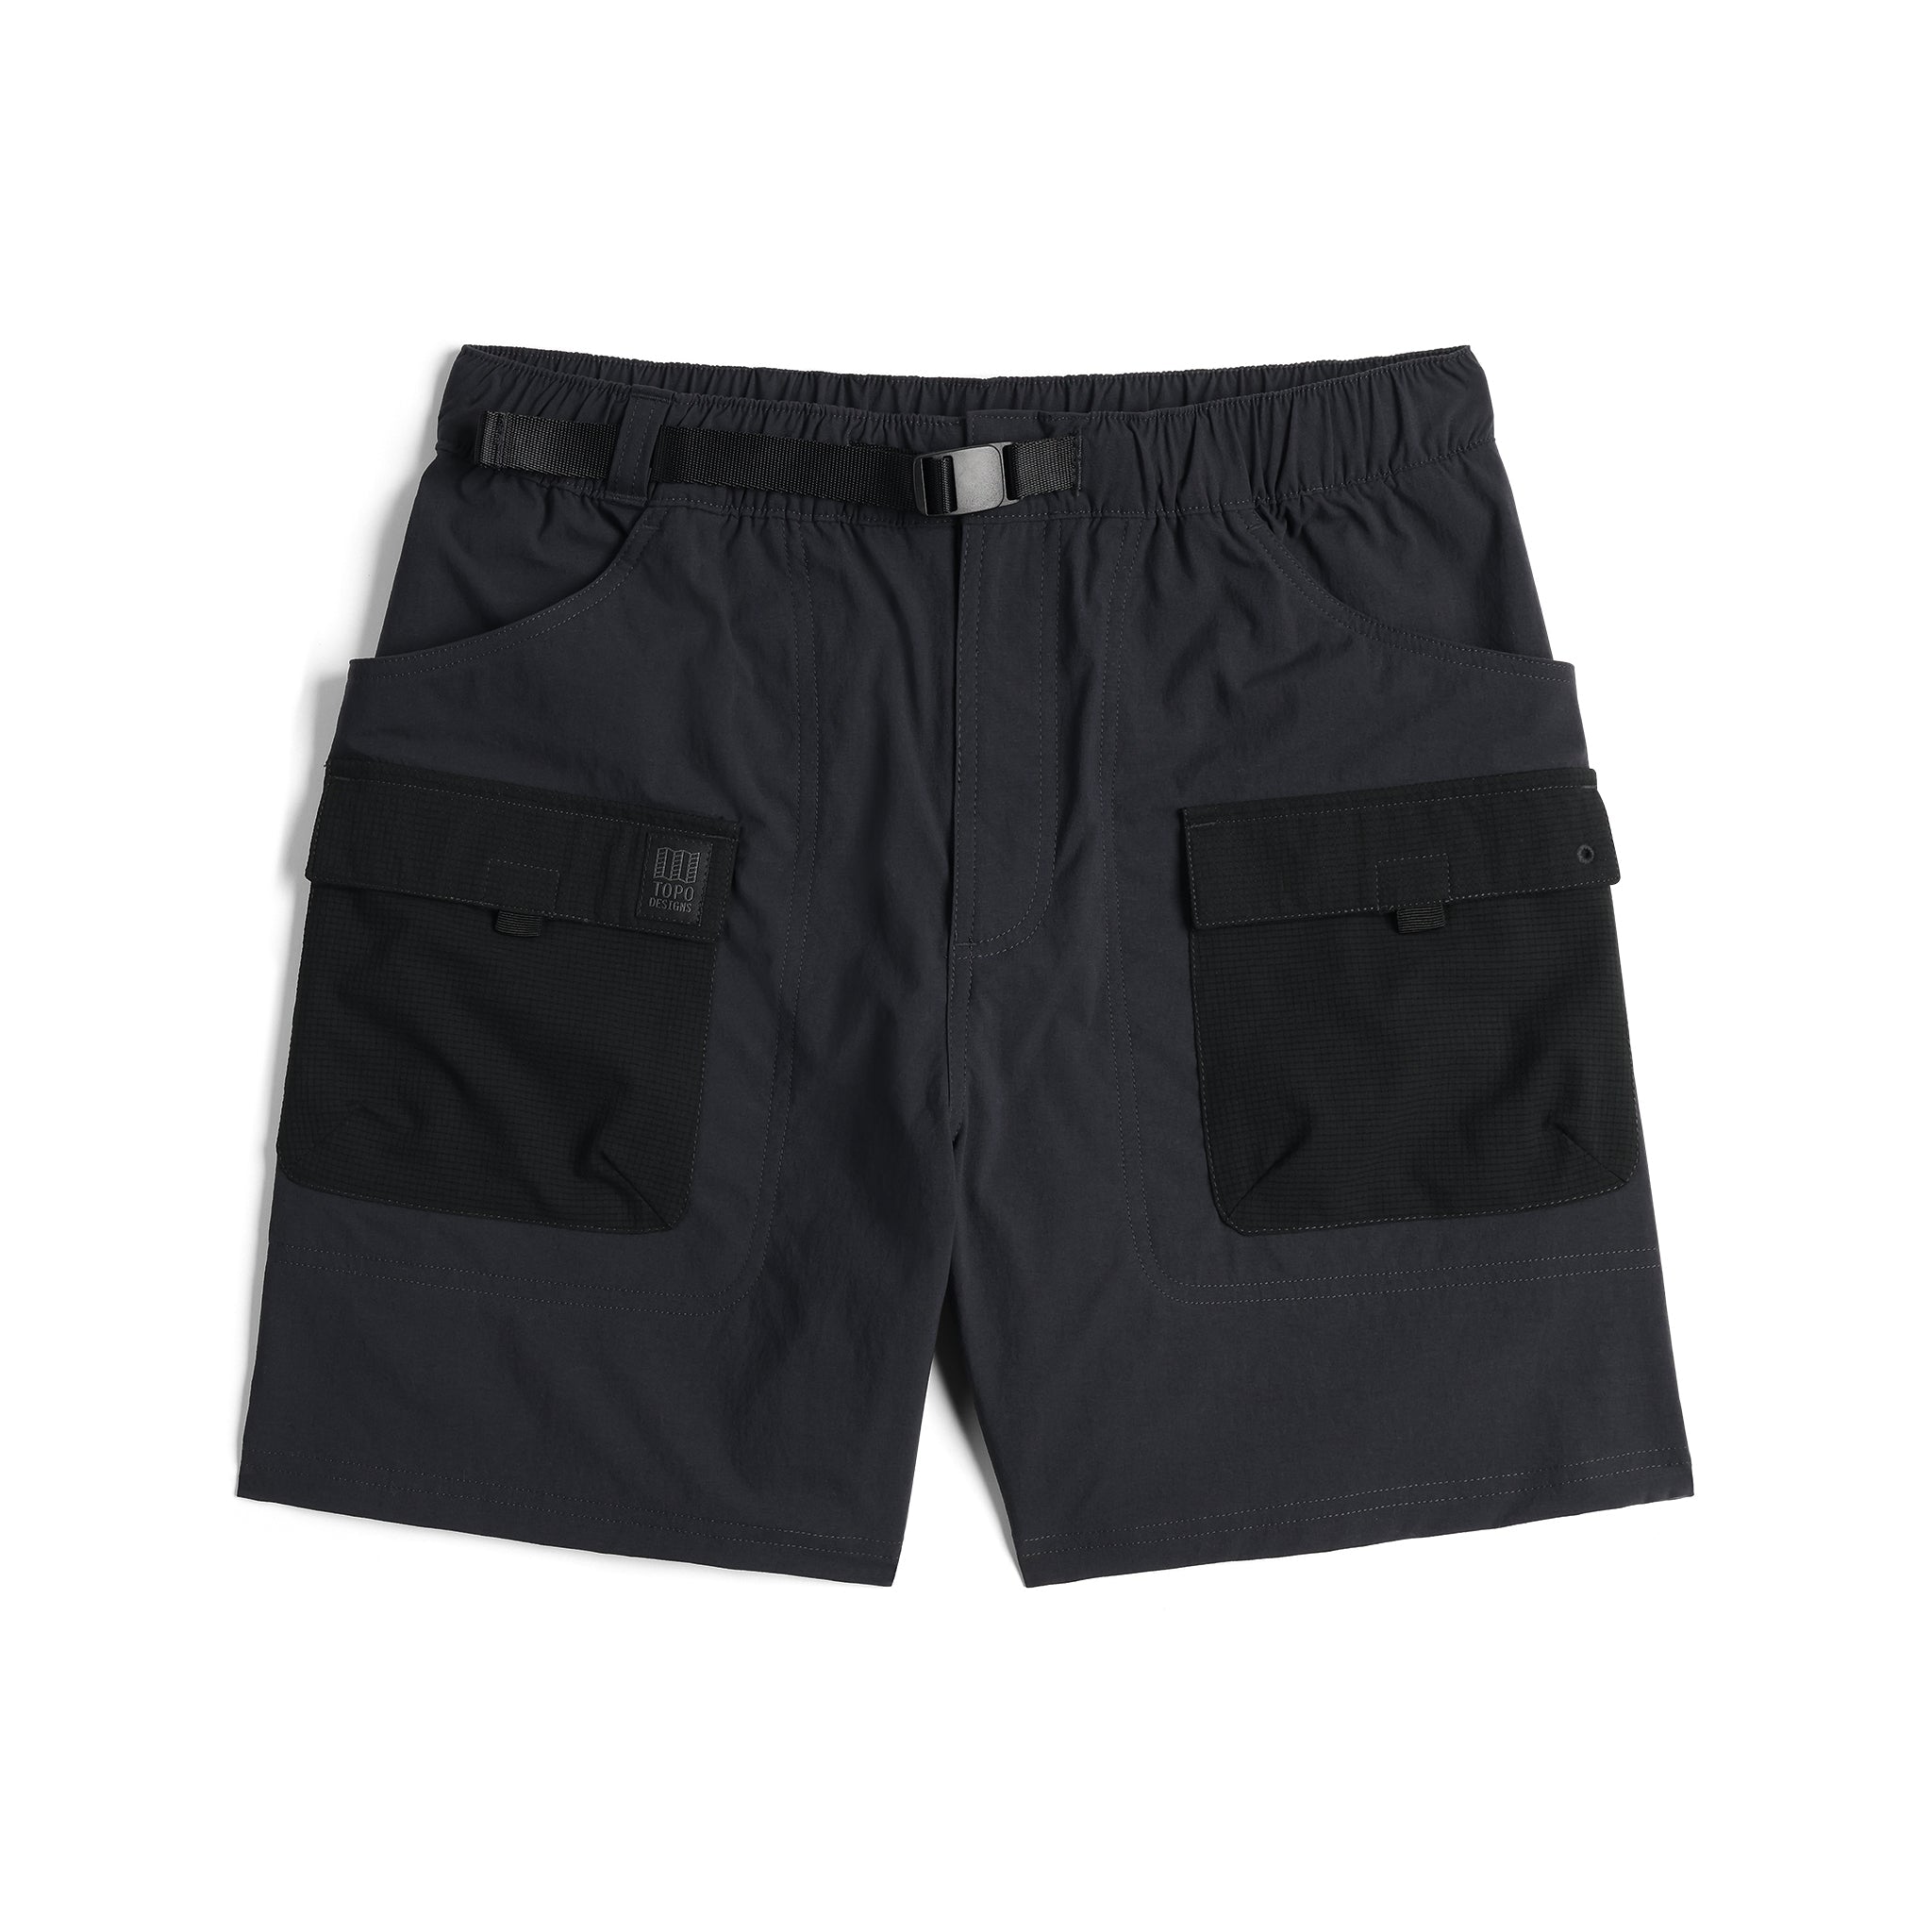 Front View of Topo Designs Retro River Shorts - Men's in "Black"